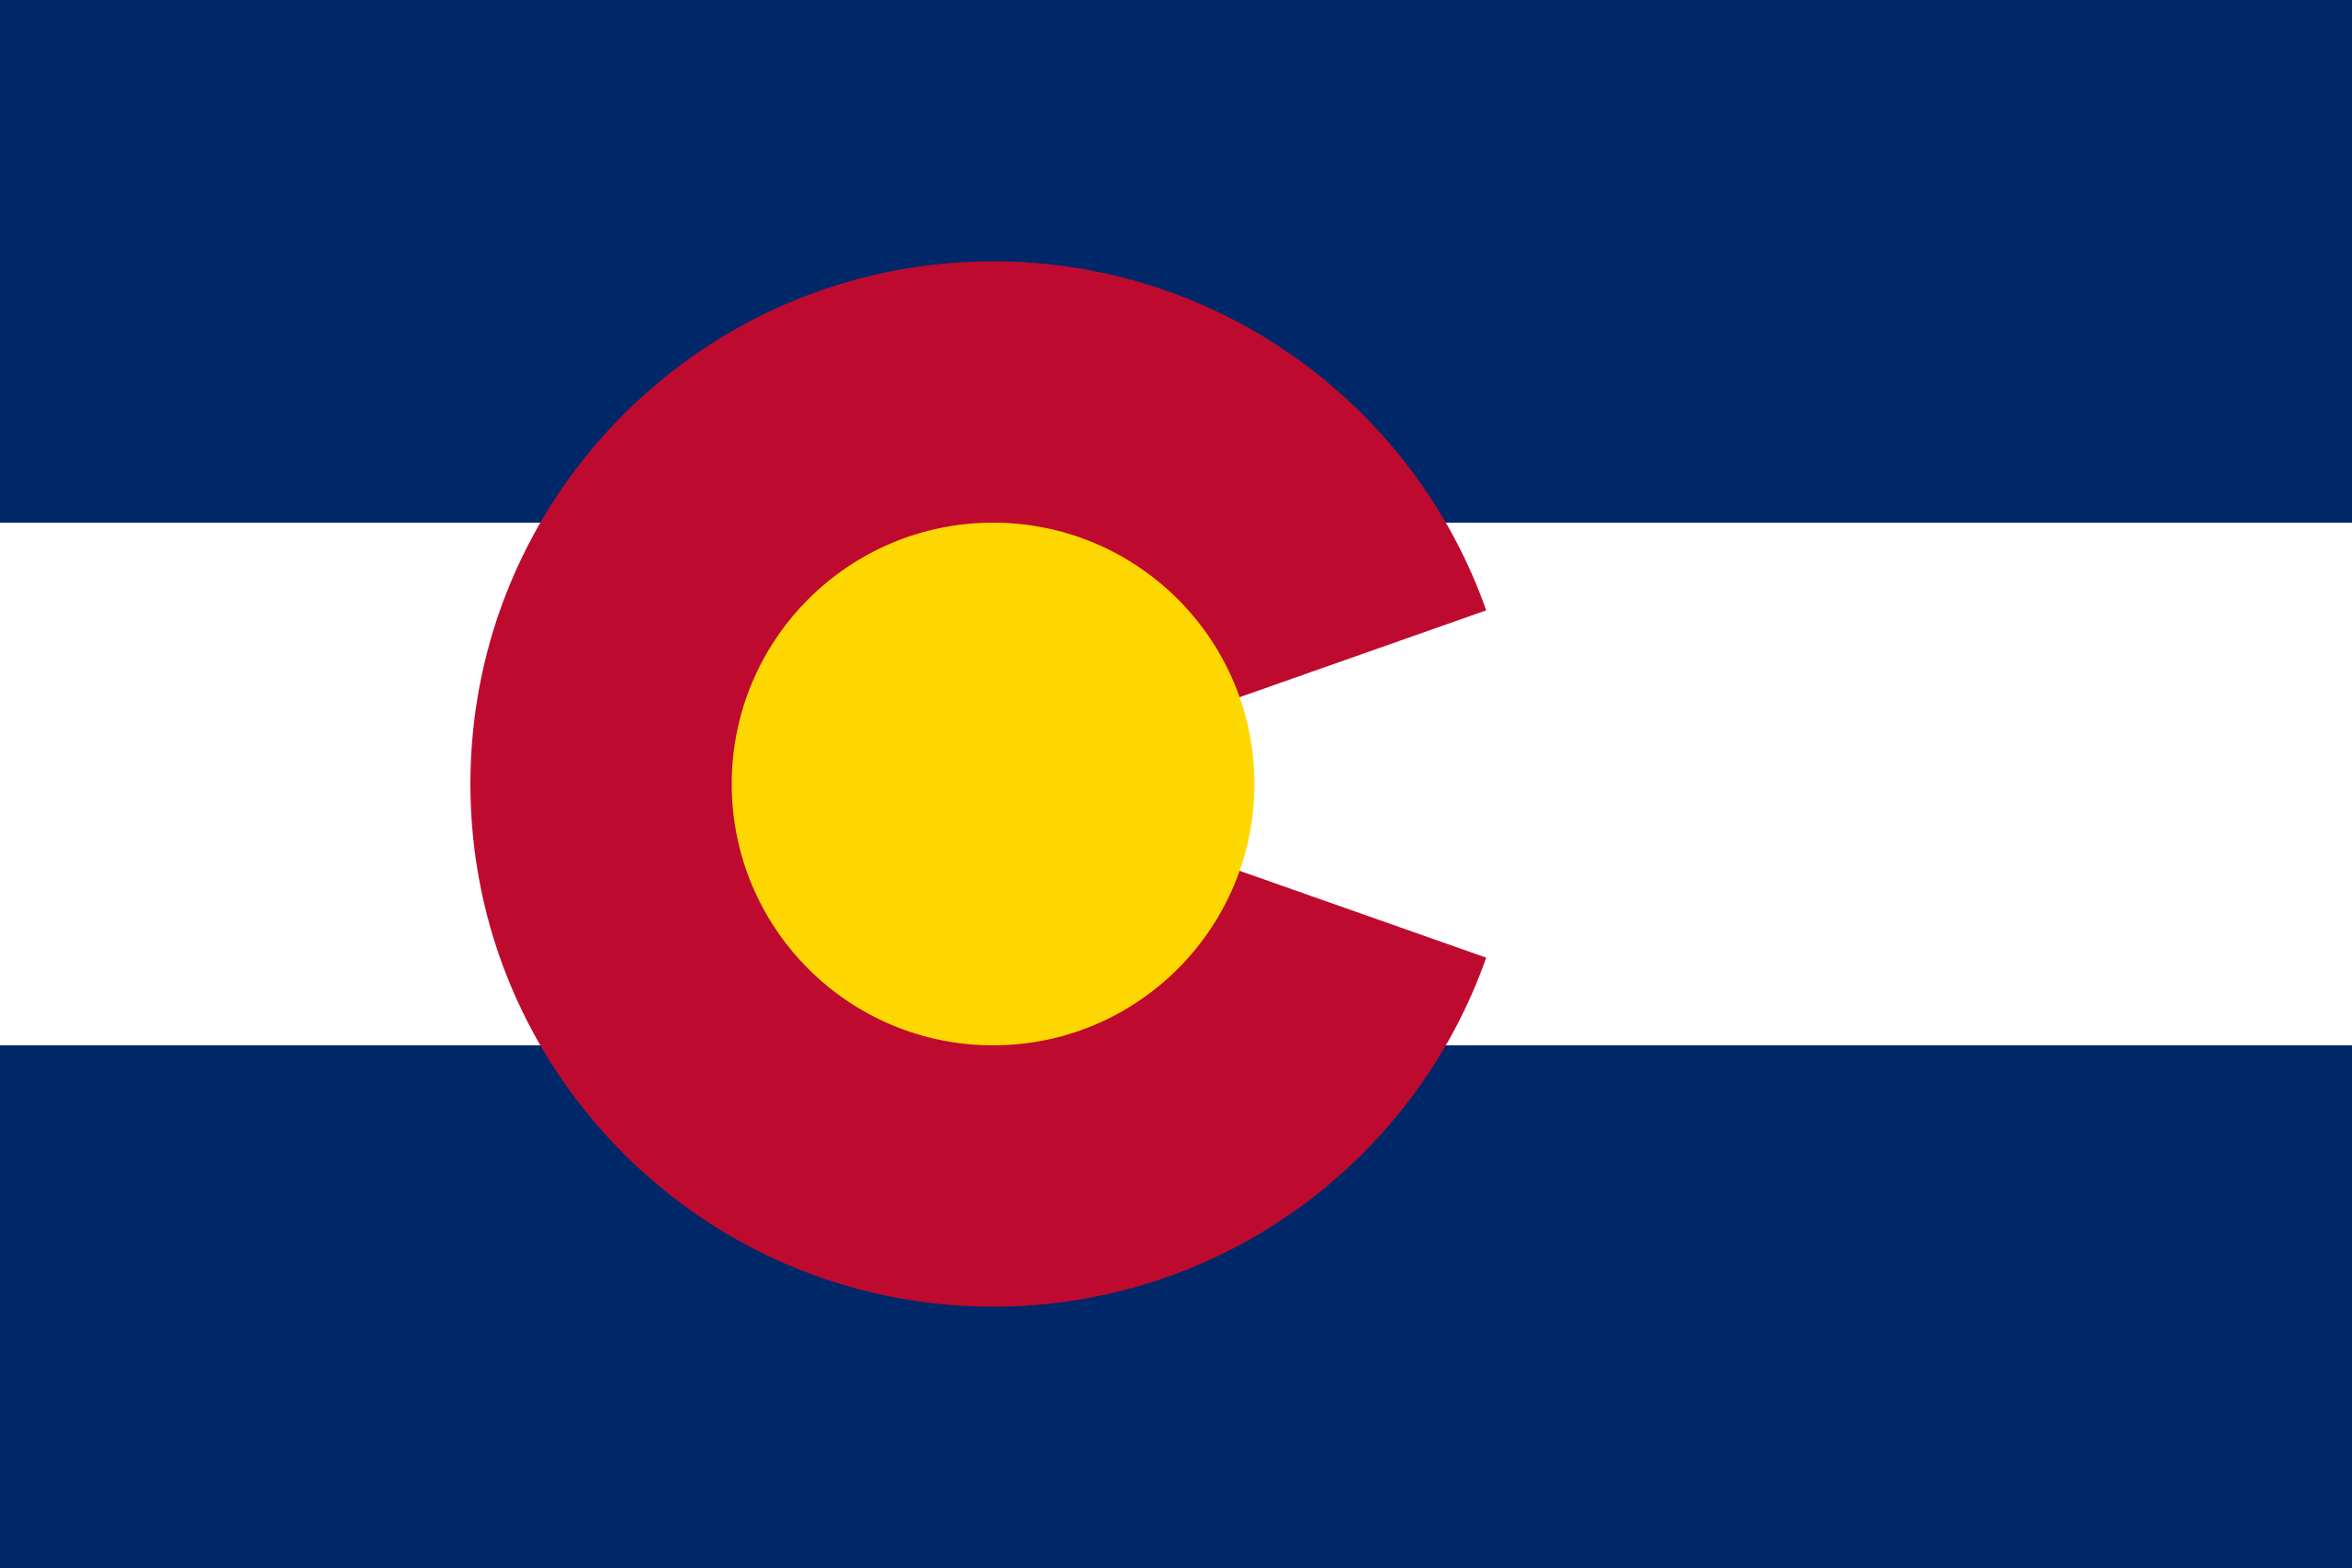 The Colorado State Flag